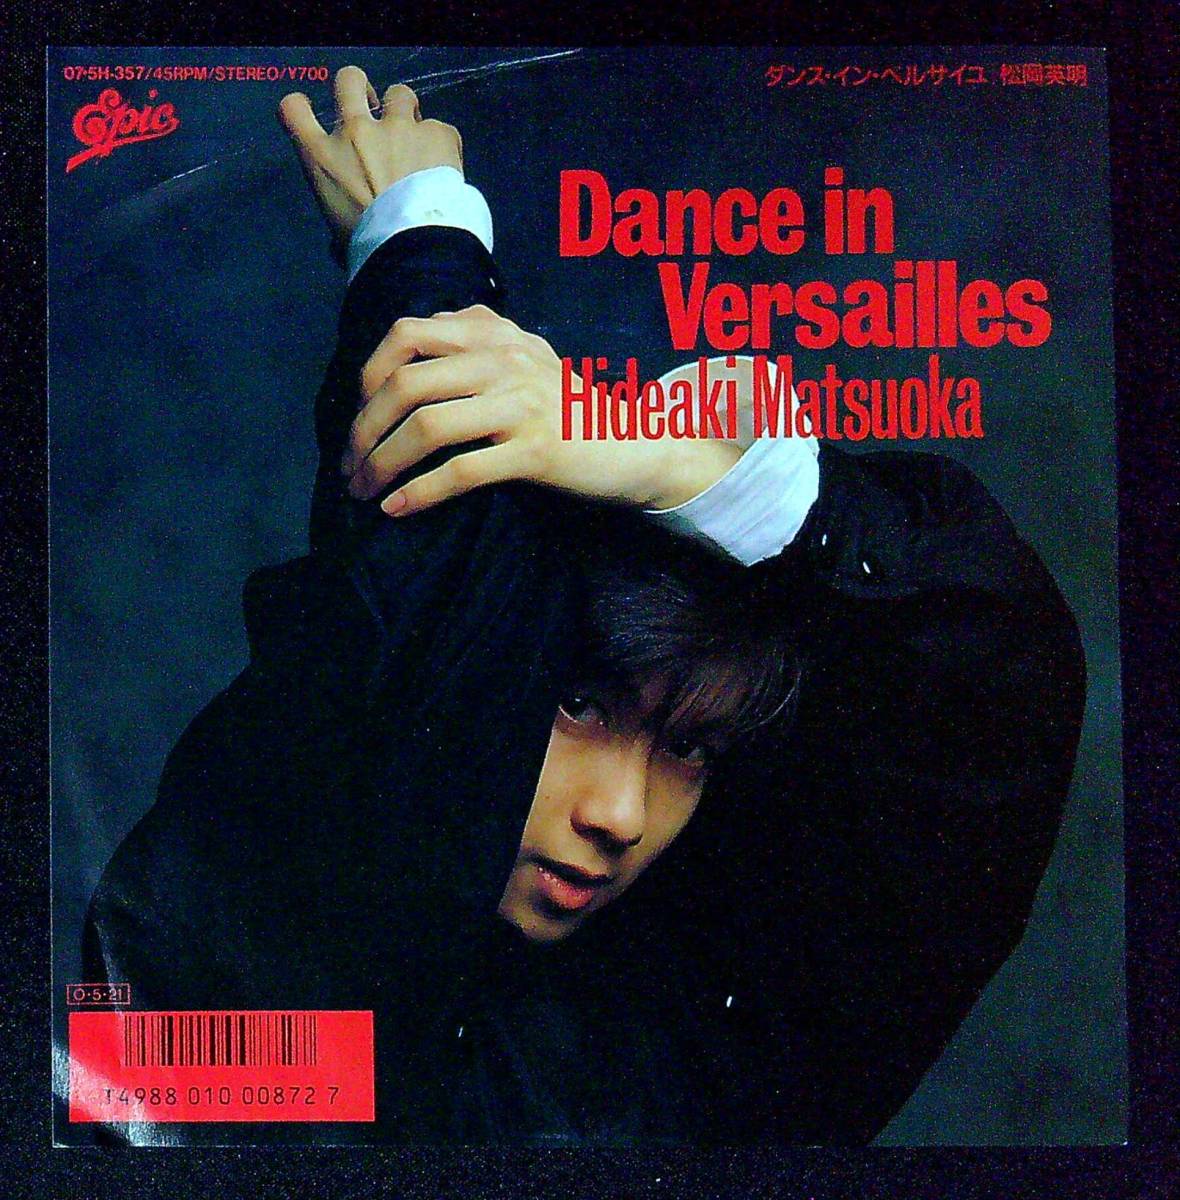 * used EP record * Matsuoka Hideaki *Dance in Versailles* karaoke *56*